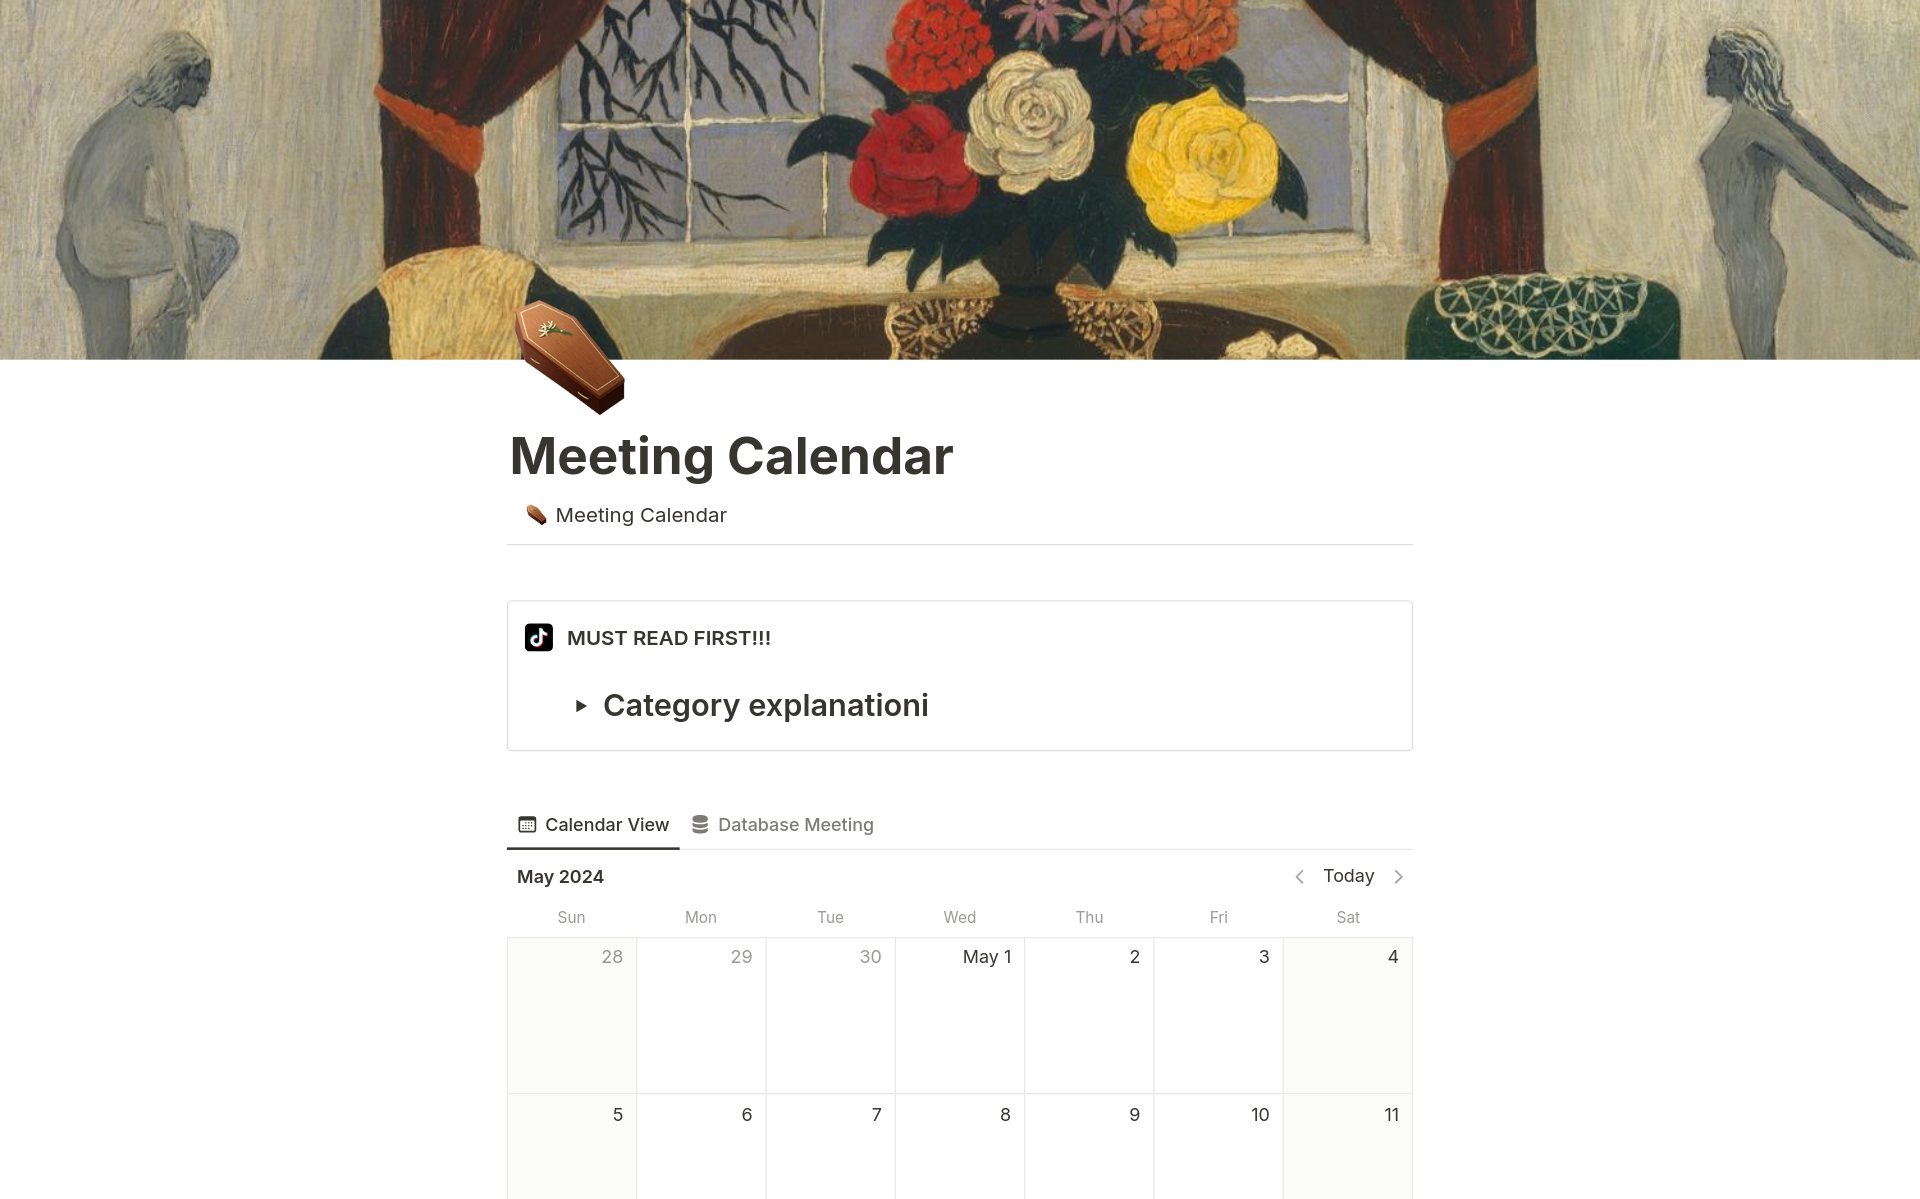 Aperçu du modèle de Meeting Calendar